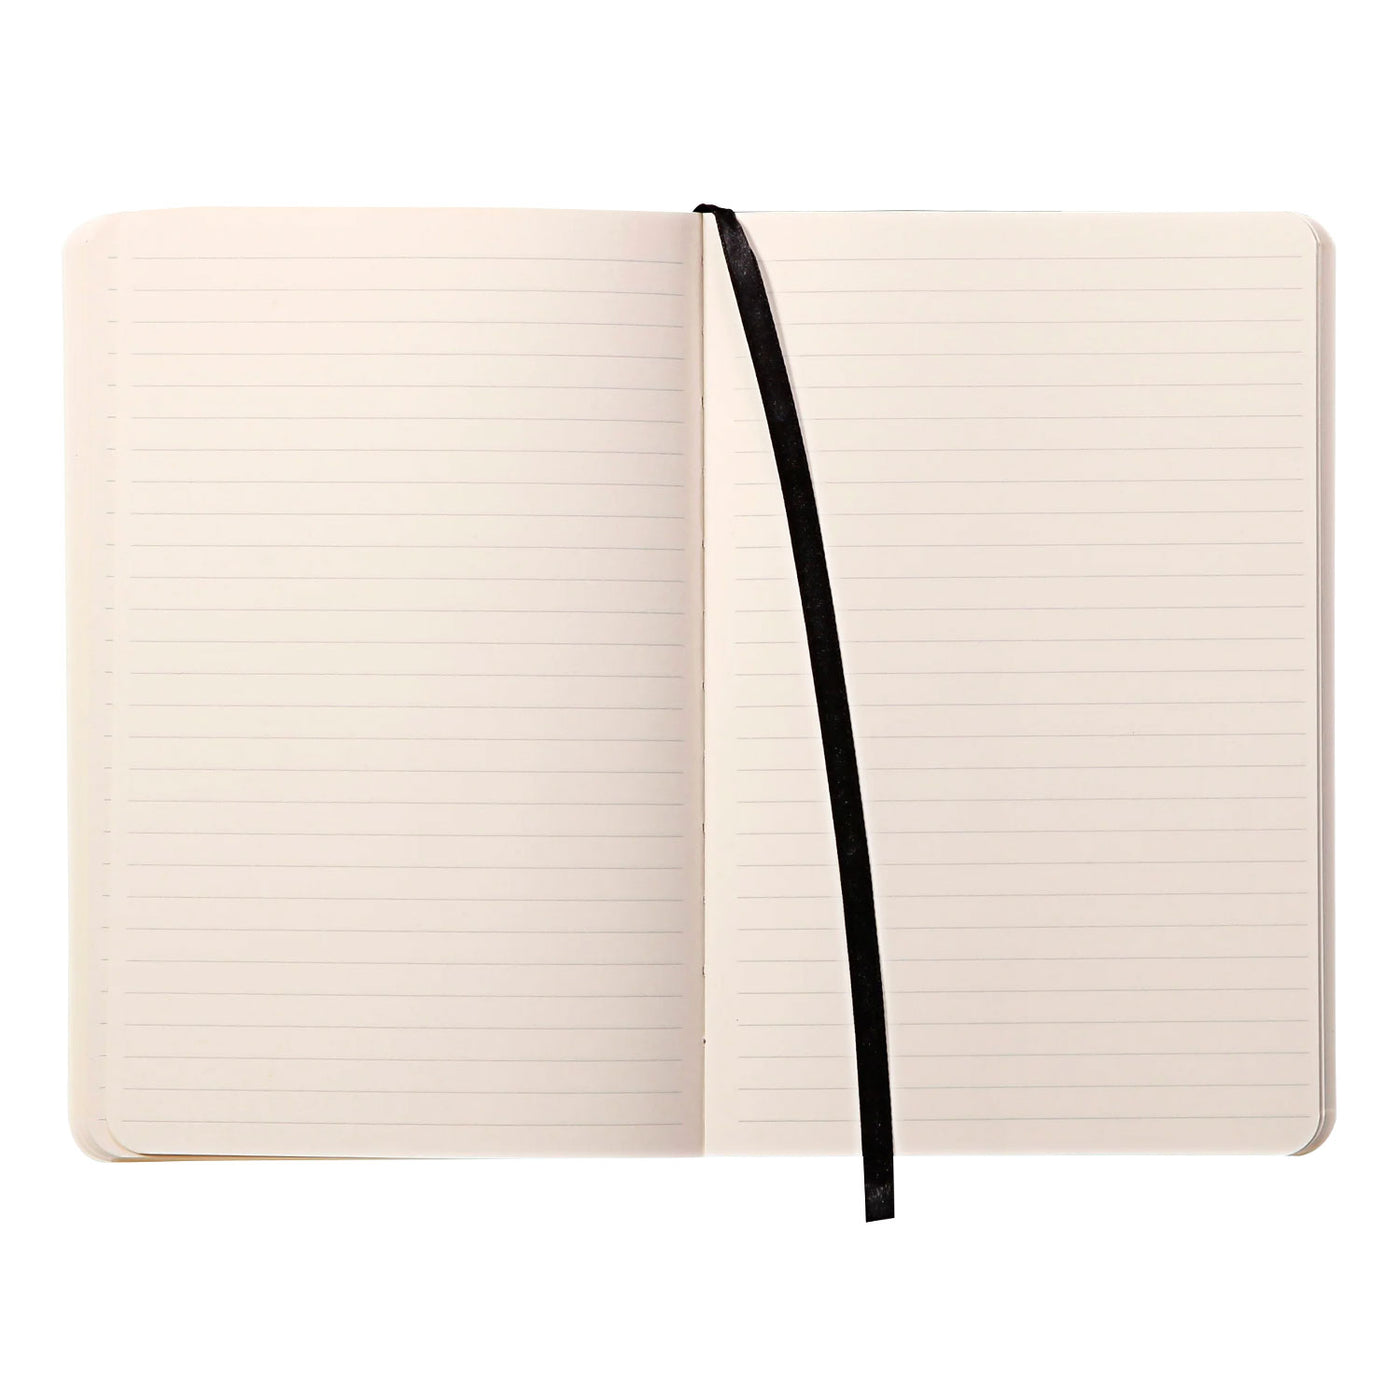 Rhodiarama Hard Cover Poppy Notebook - A5 Ruled 2